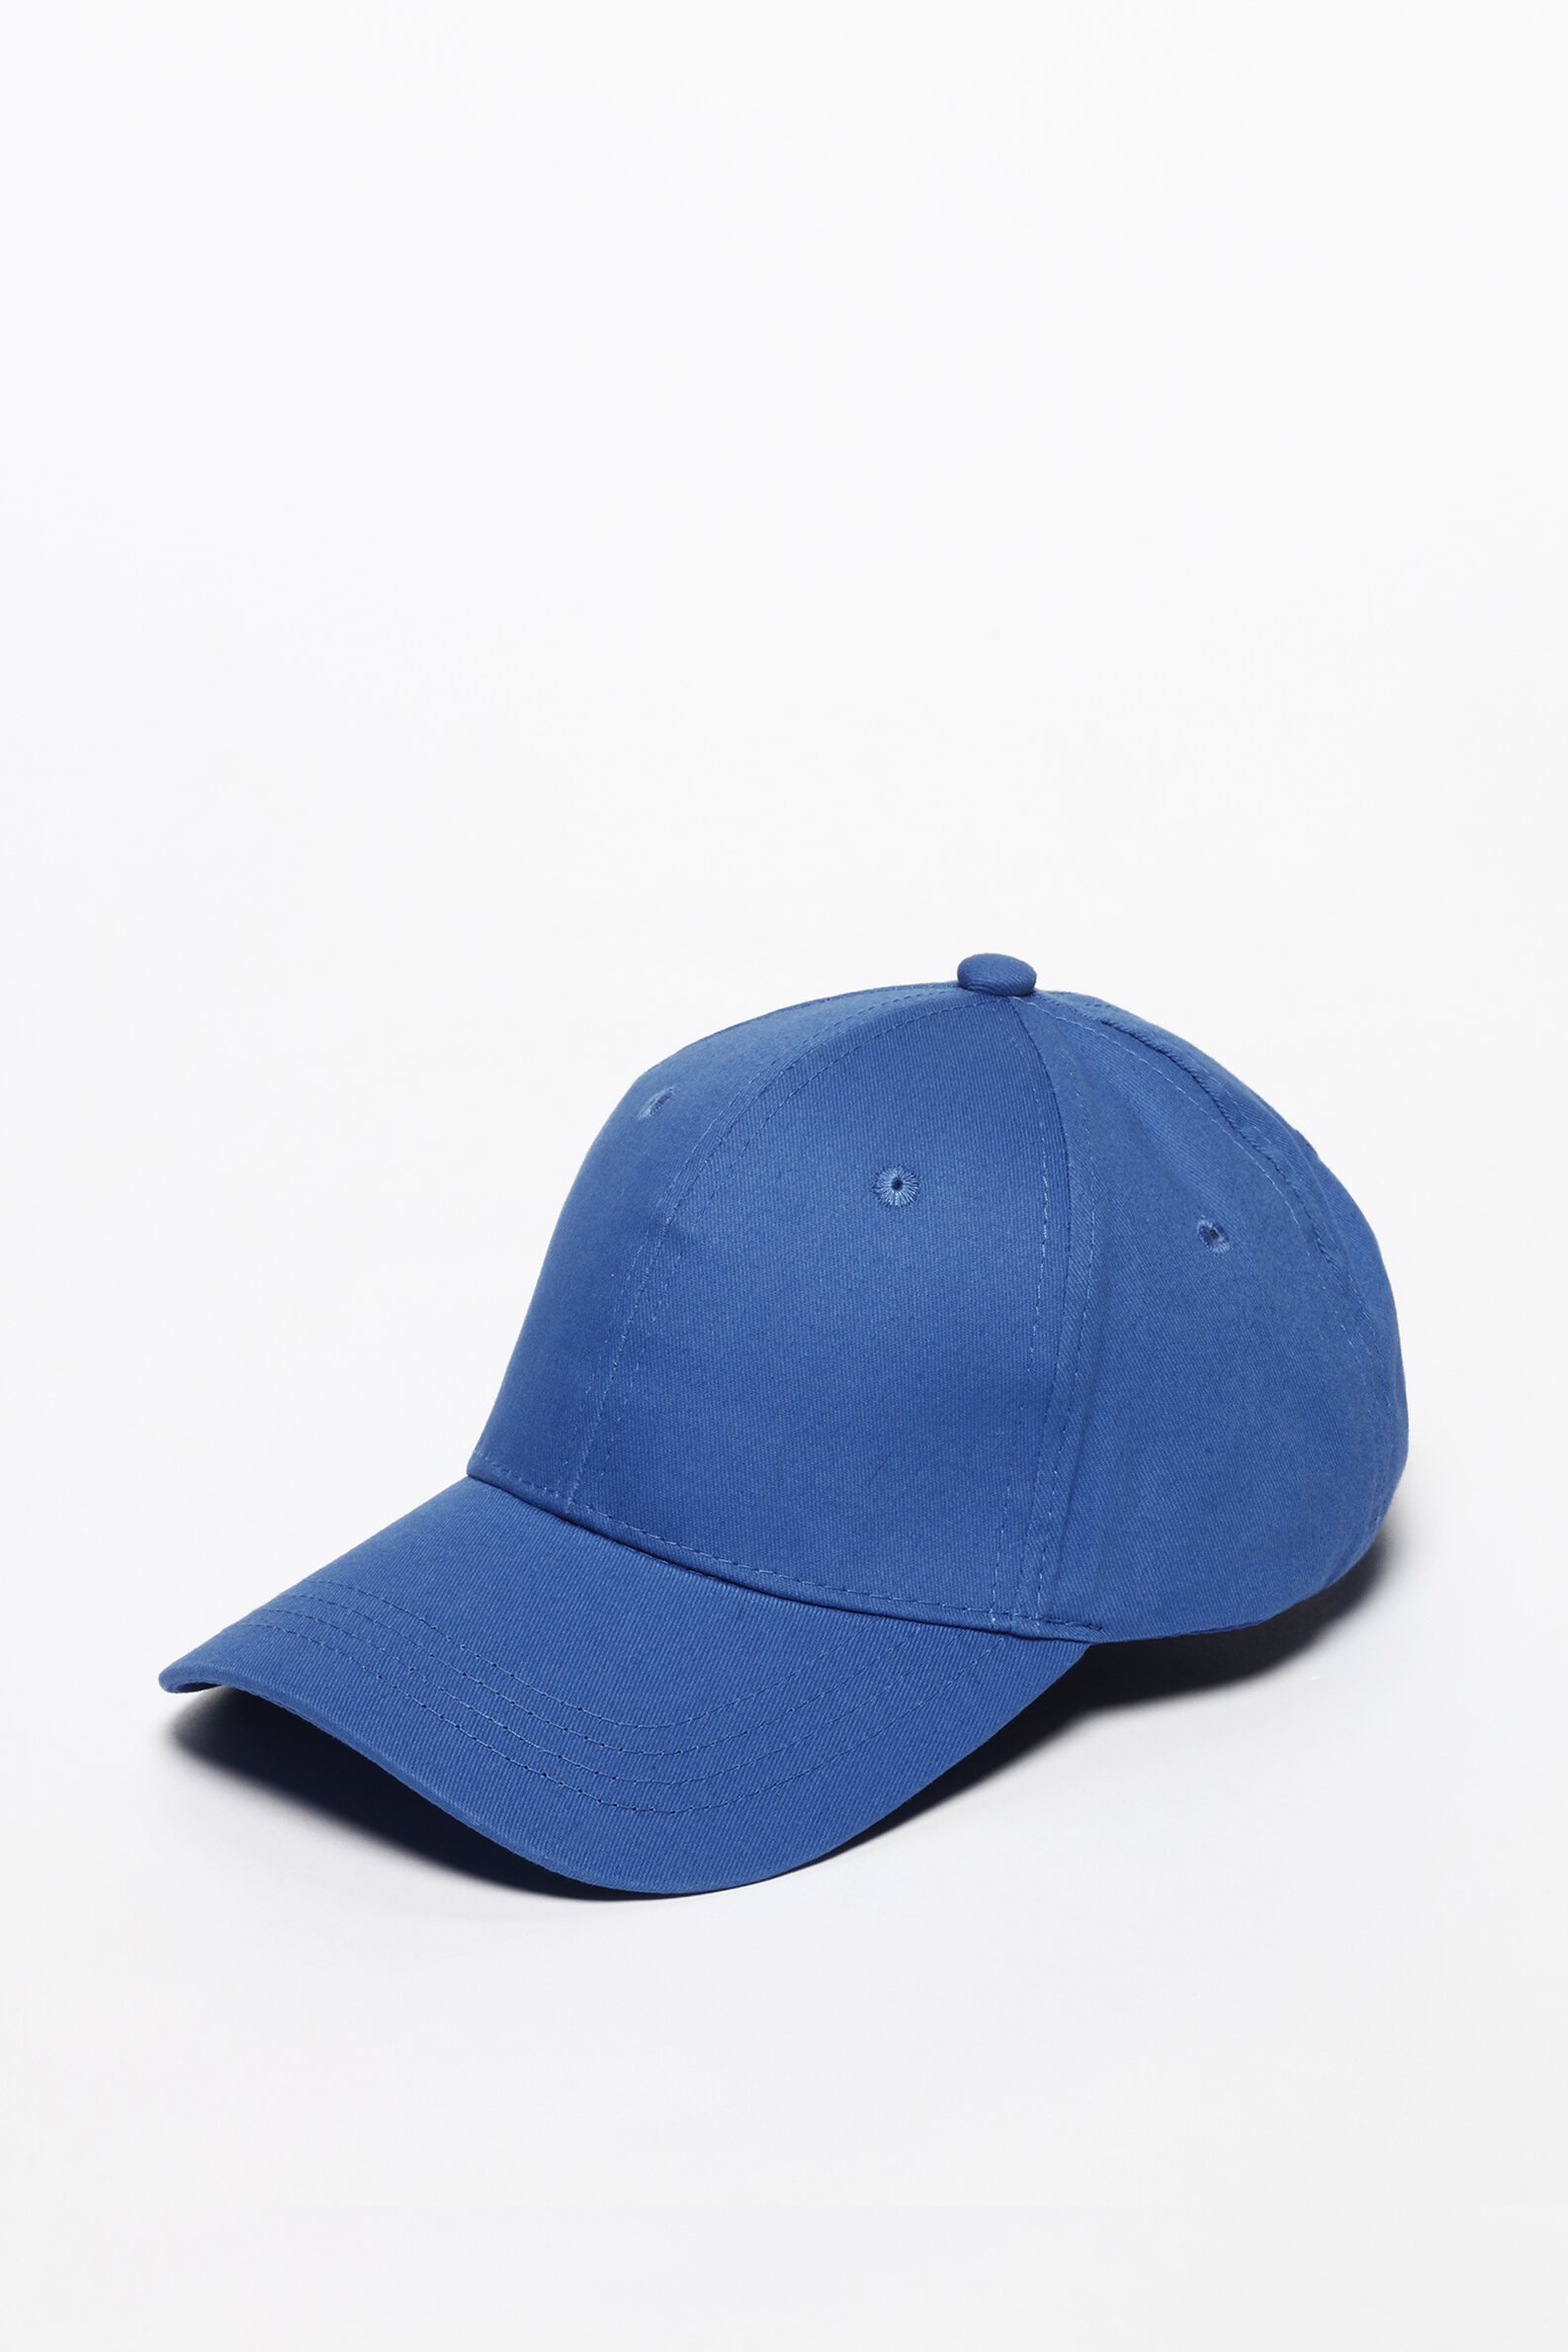 Basic cap - Caps, Hats - ACCESSORIES - Man 